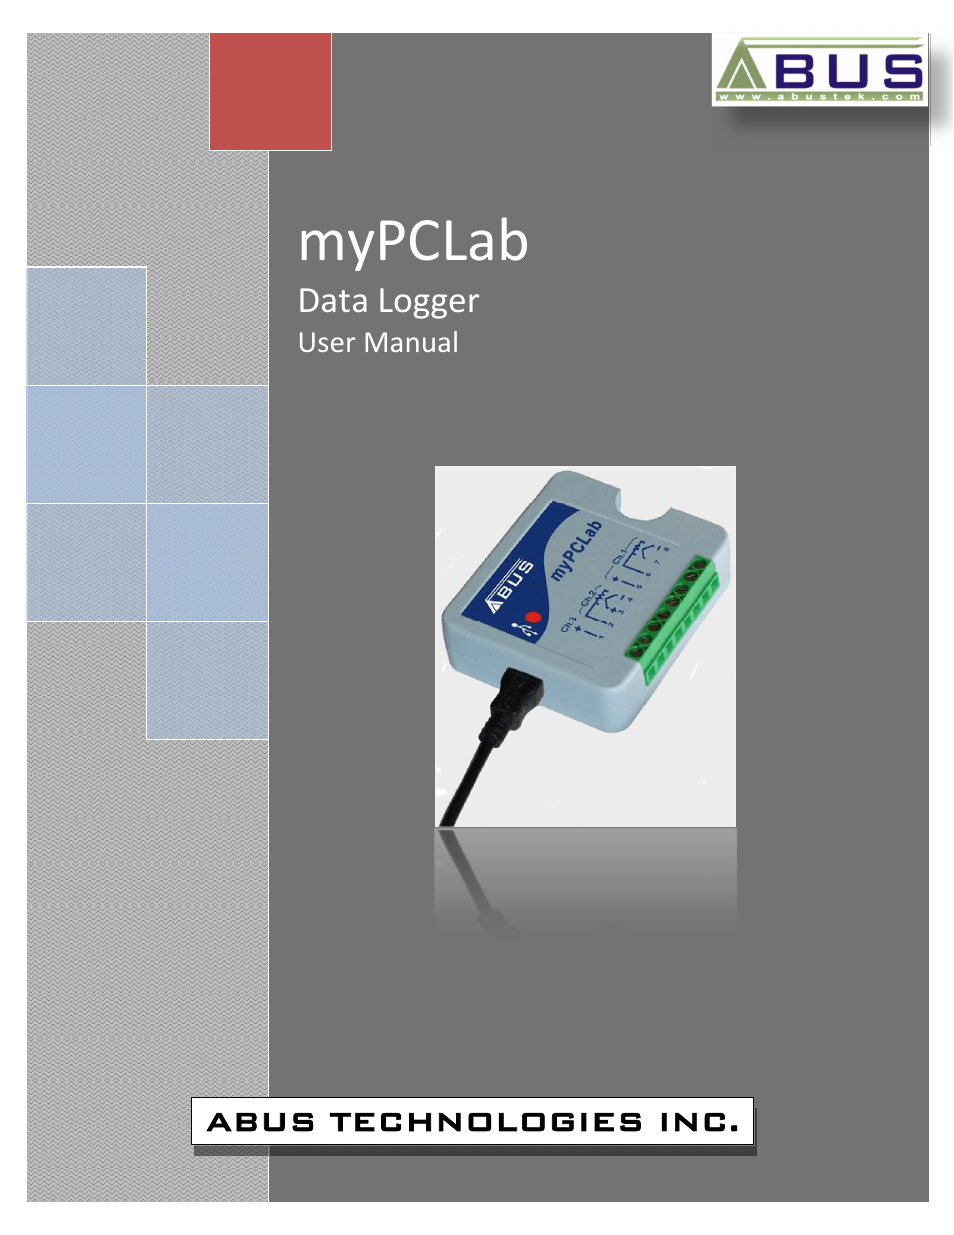 myPCLab Data Acquisition / Recorder